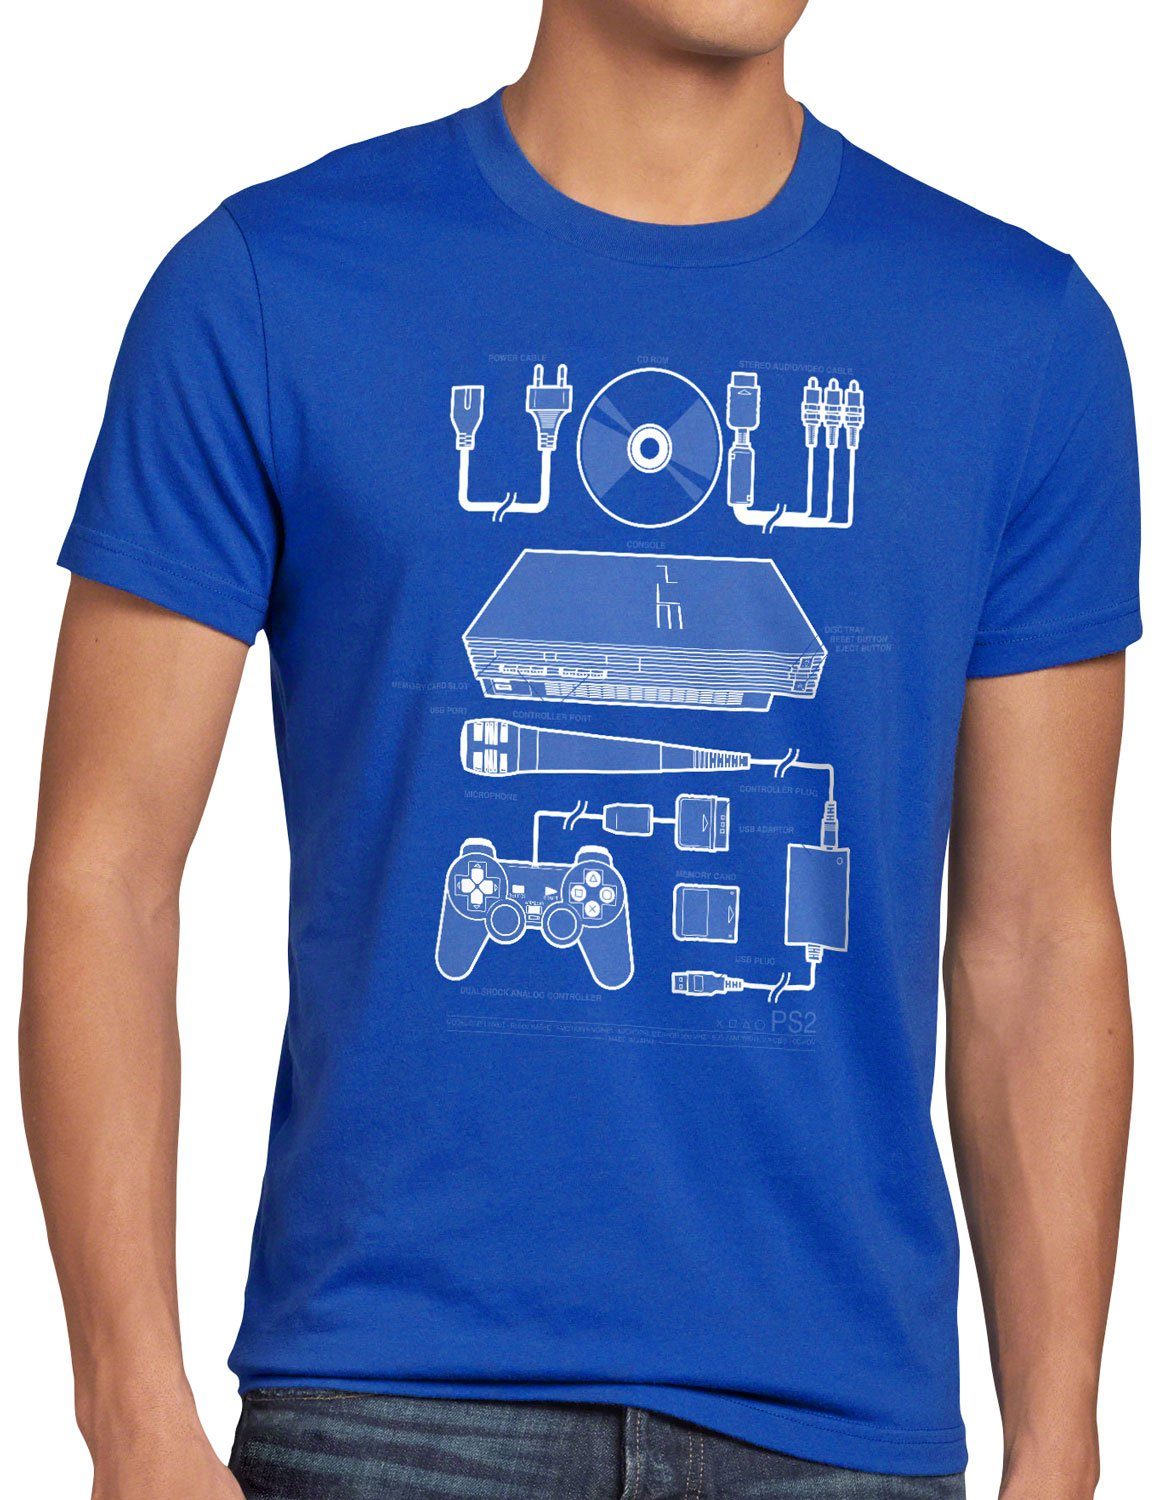 style3 Print-Shirt Herren T-Shirt PS2 Retro Gamer PS gamepad konsole classic blau